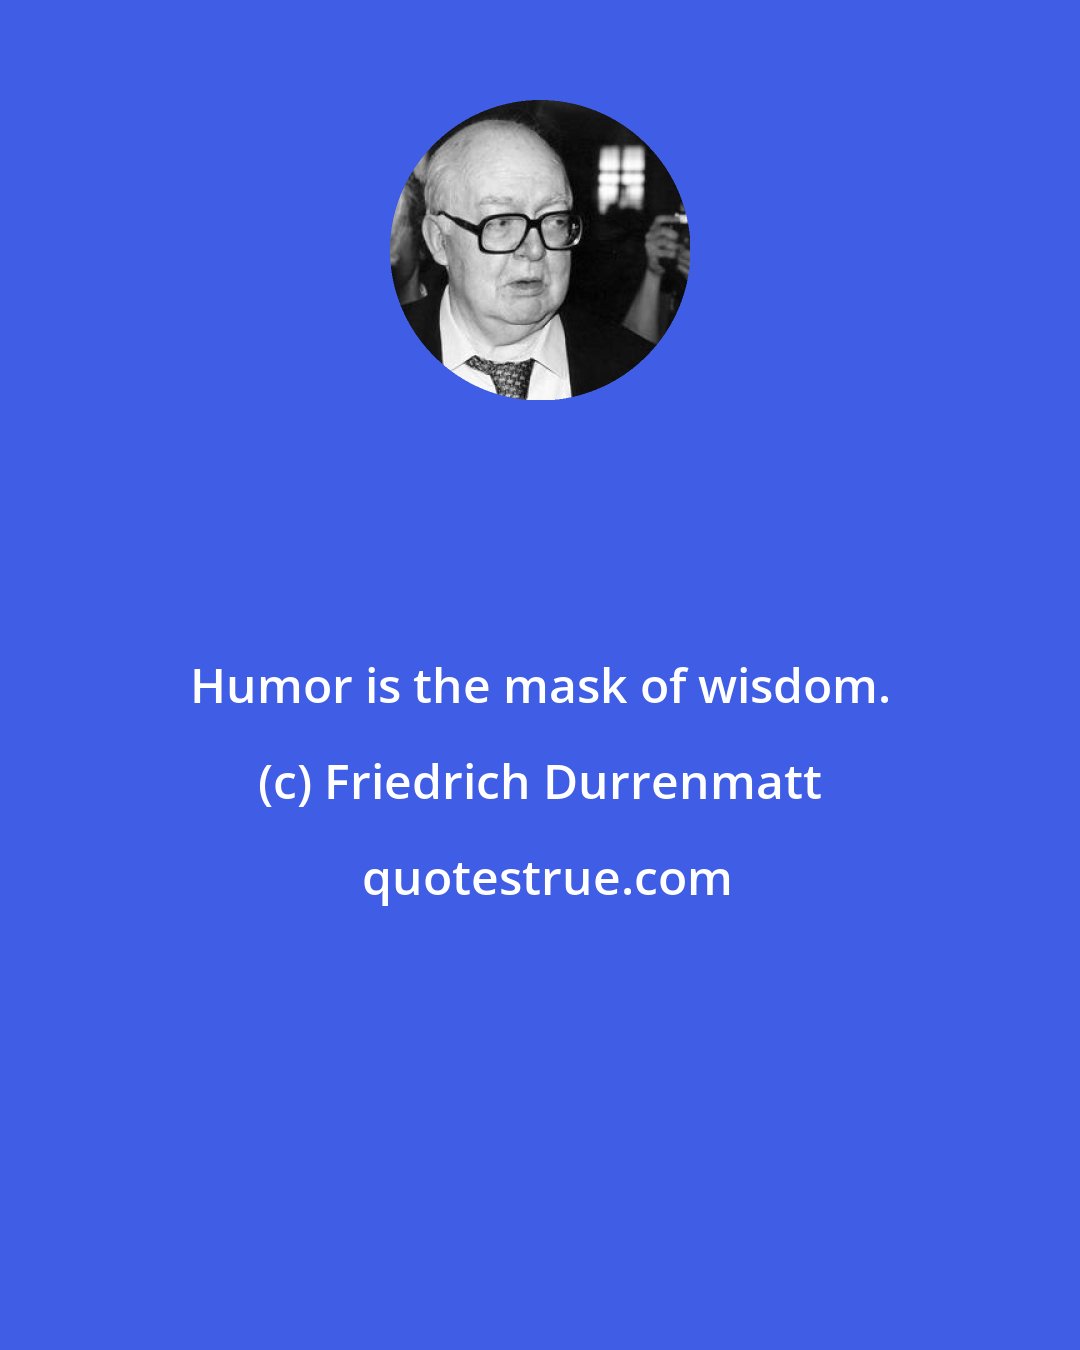 Friedrich Durrenmatt: Humor is the mask of wisdom.